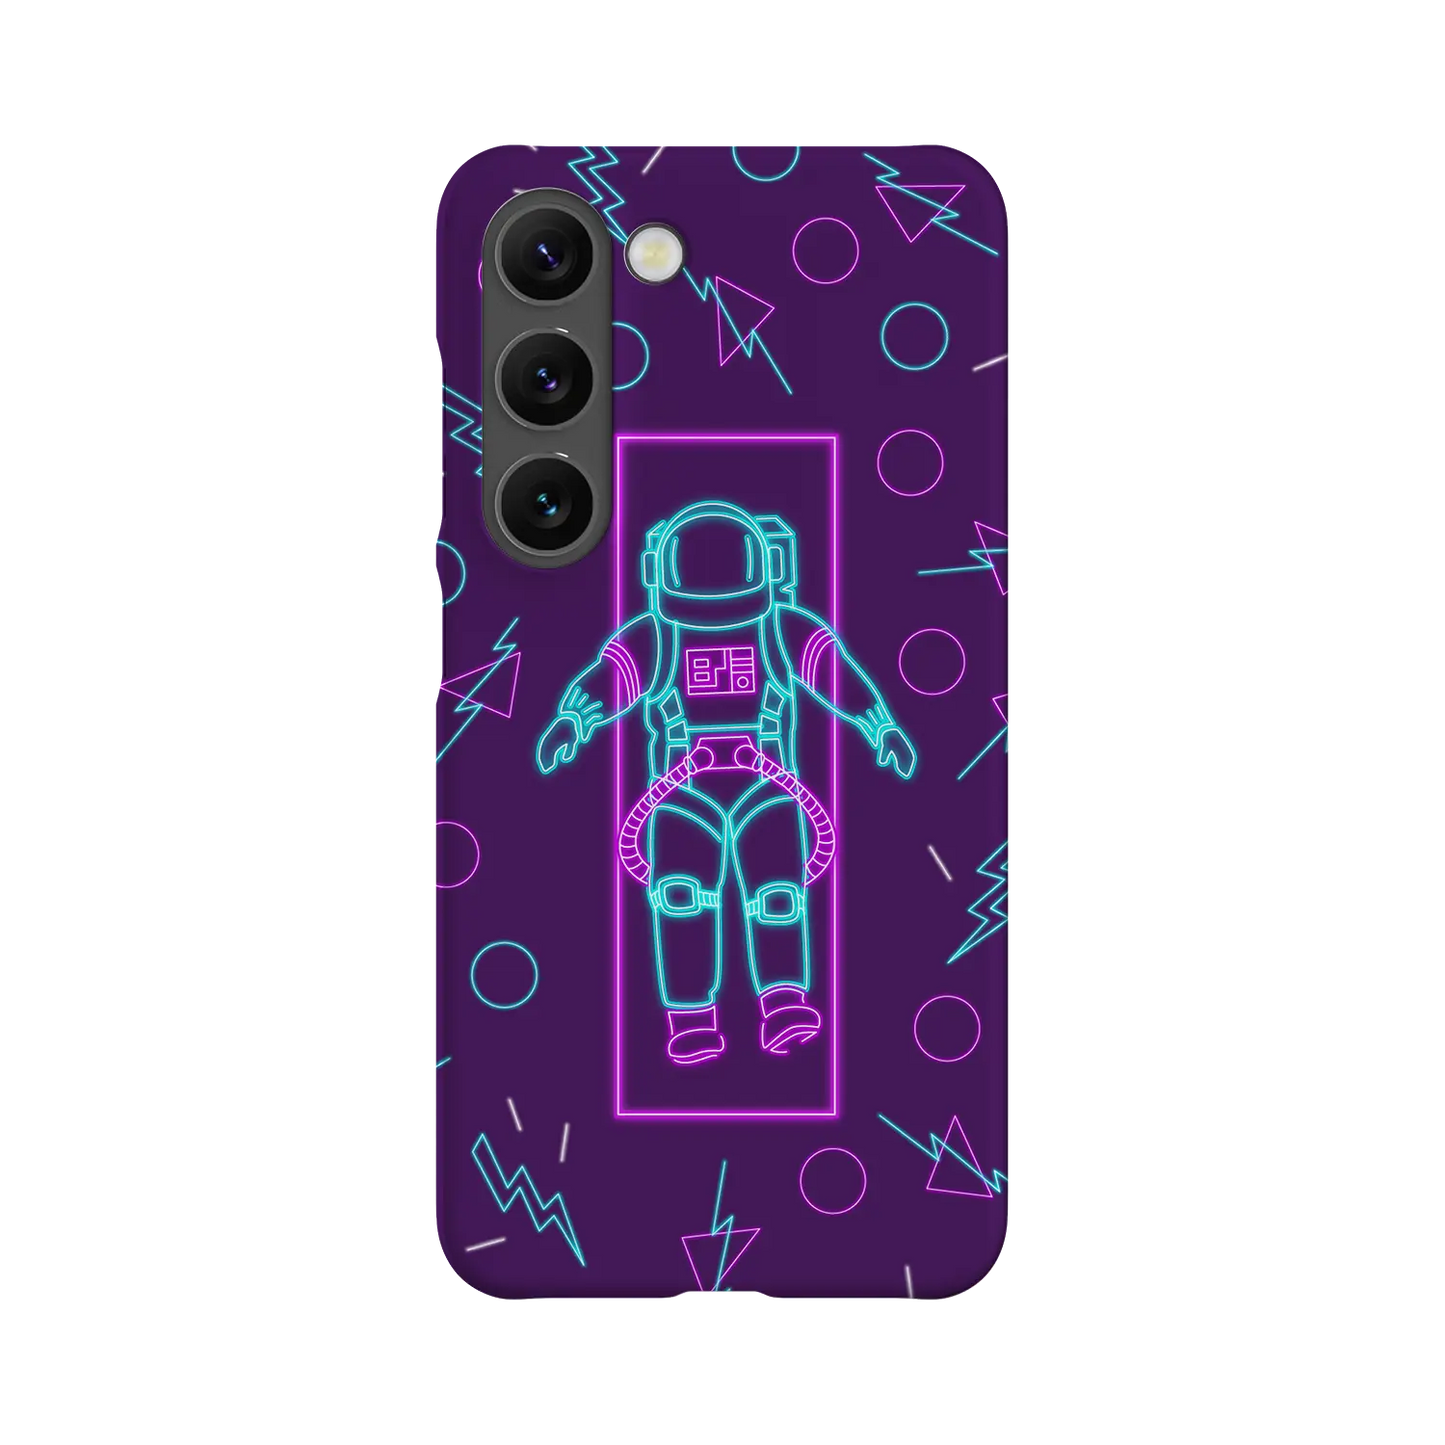 Neon Astro - Personalised Galaxy S Case